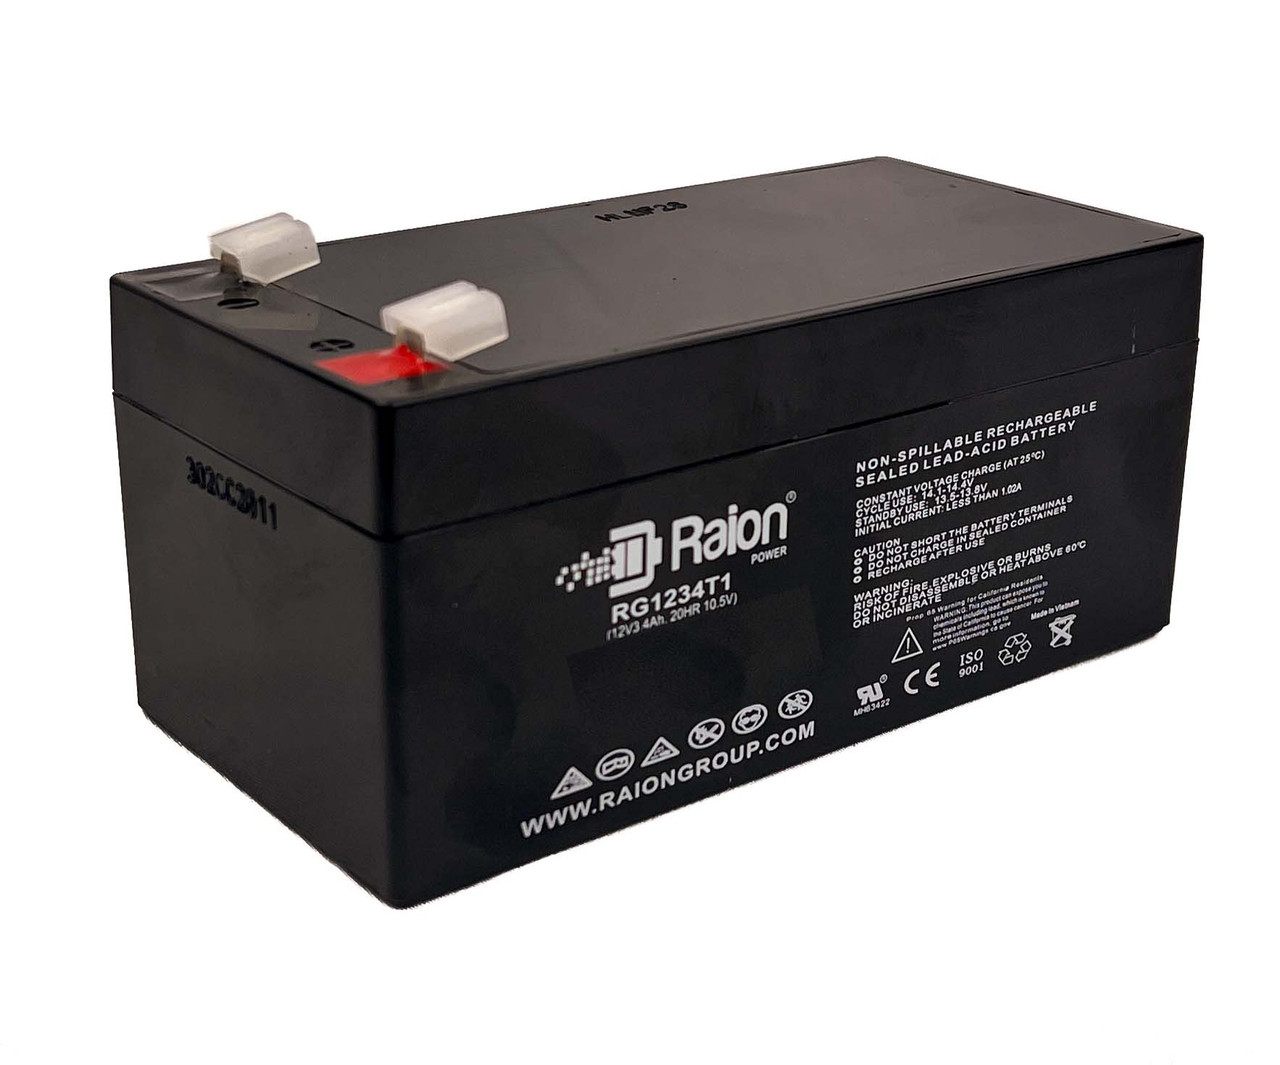 Raion Power 12V 3.4Ah Non-Spillable Replacement Battery for Douglas DG123F